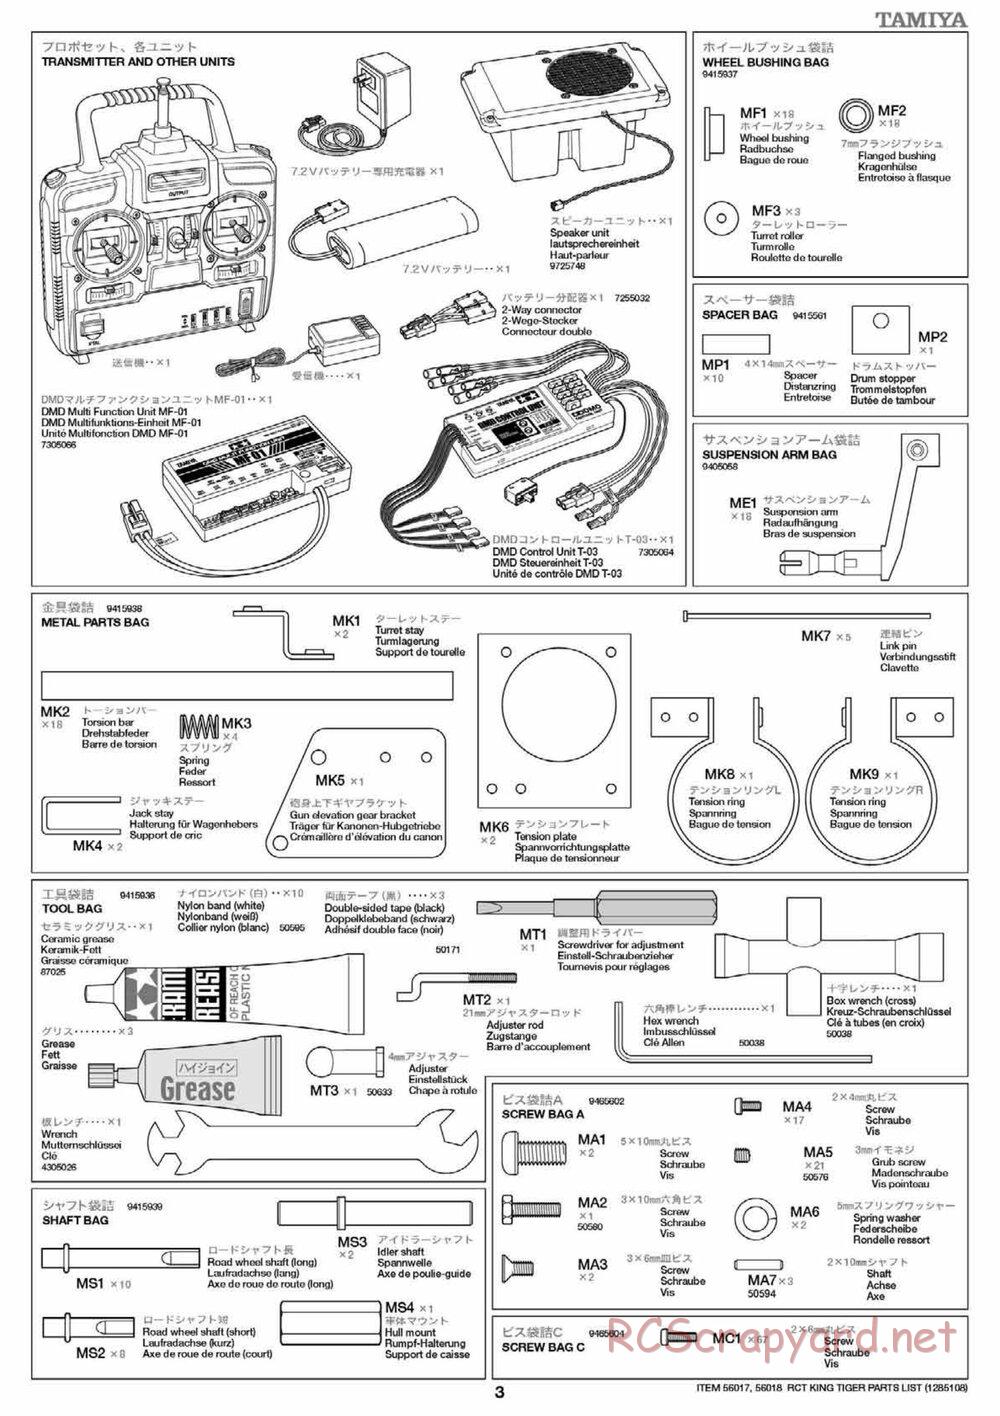 Tamiya - King Tiger - 1/16 Scale Chassis - Manual - Page 31